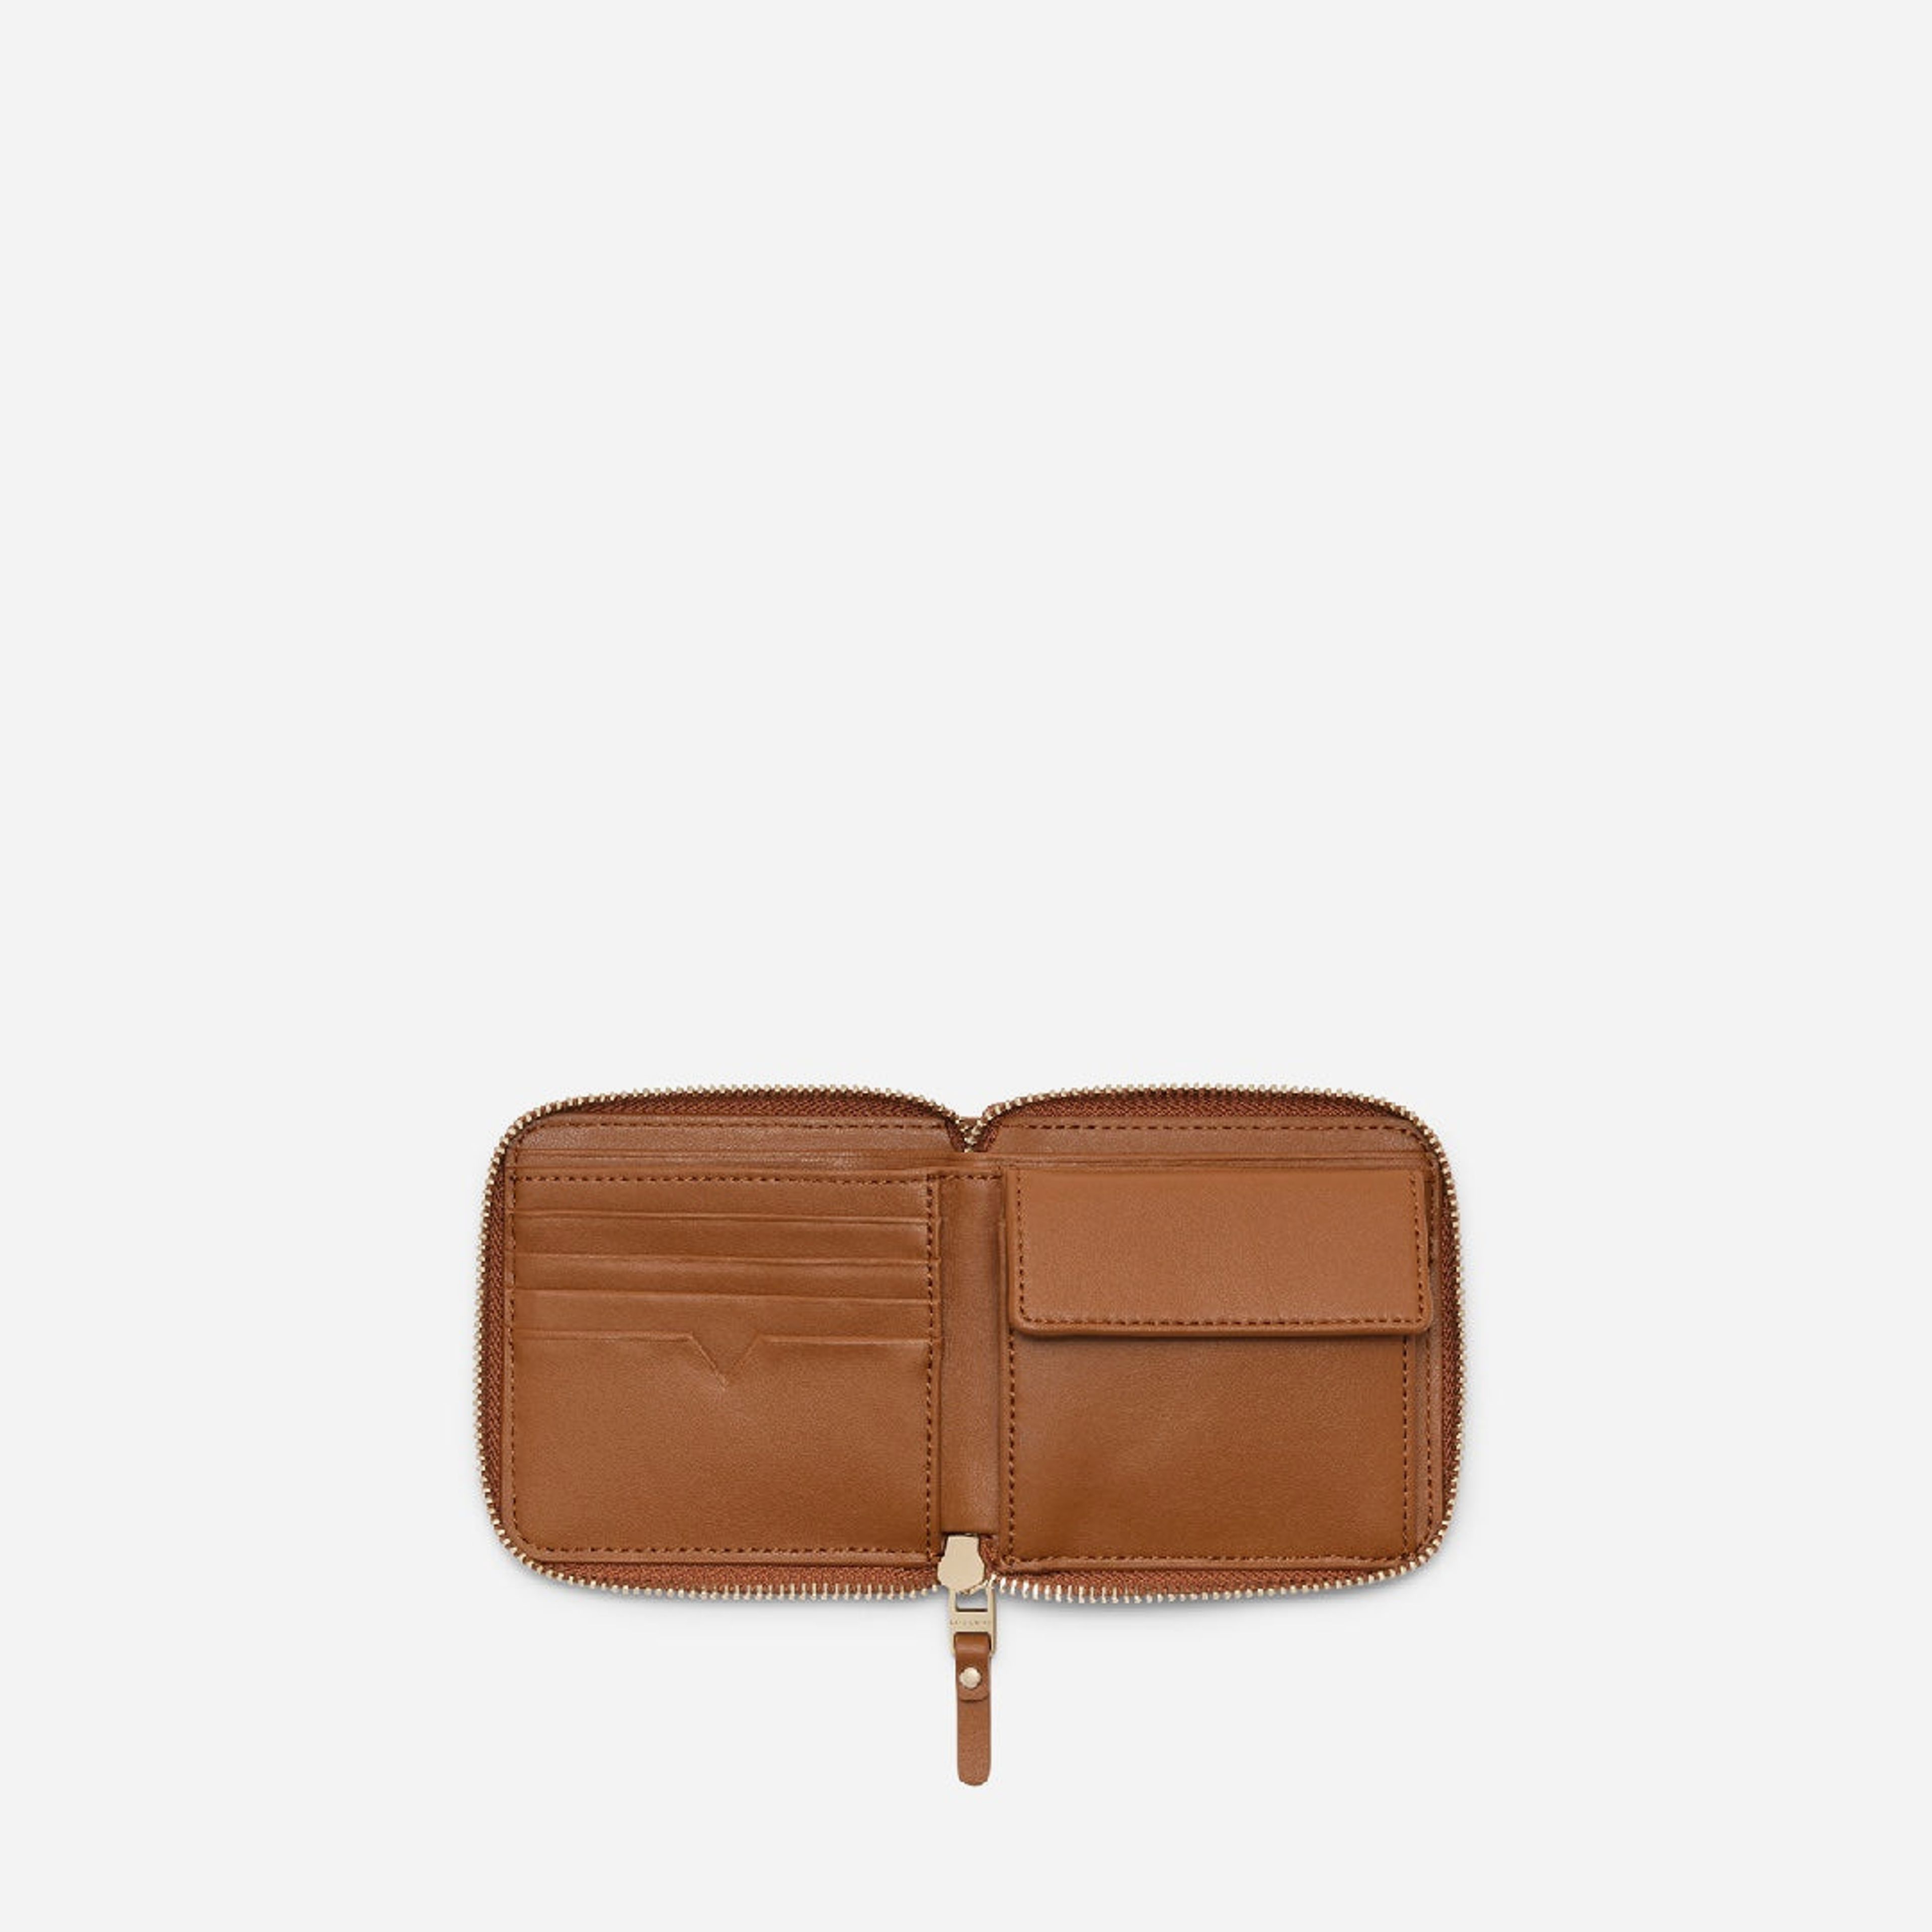 Mallorca Small Wallet - Cactus Leather - Cognac / Gold / Camel